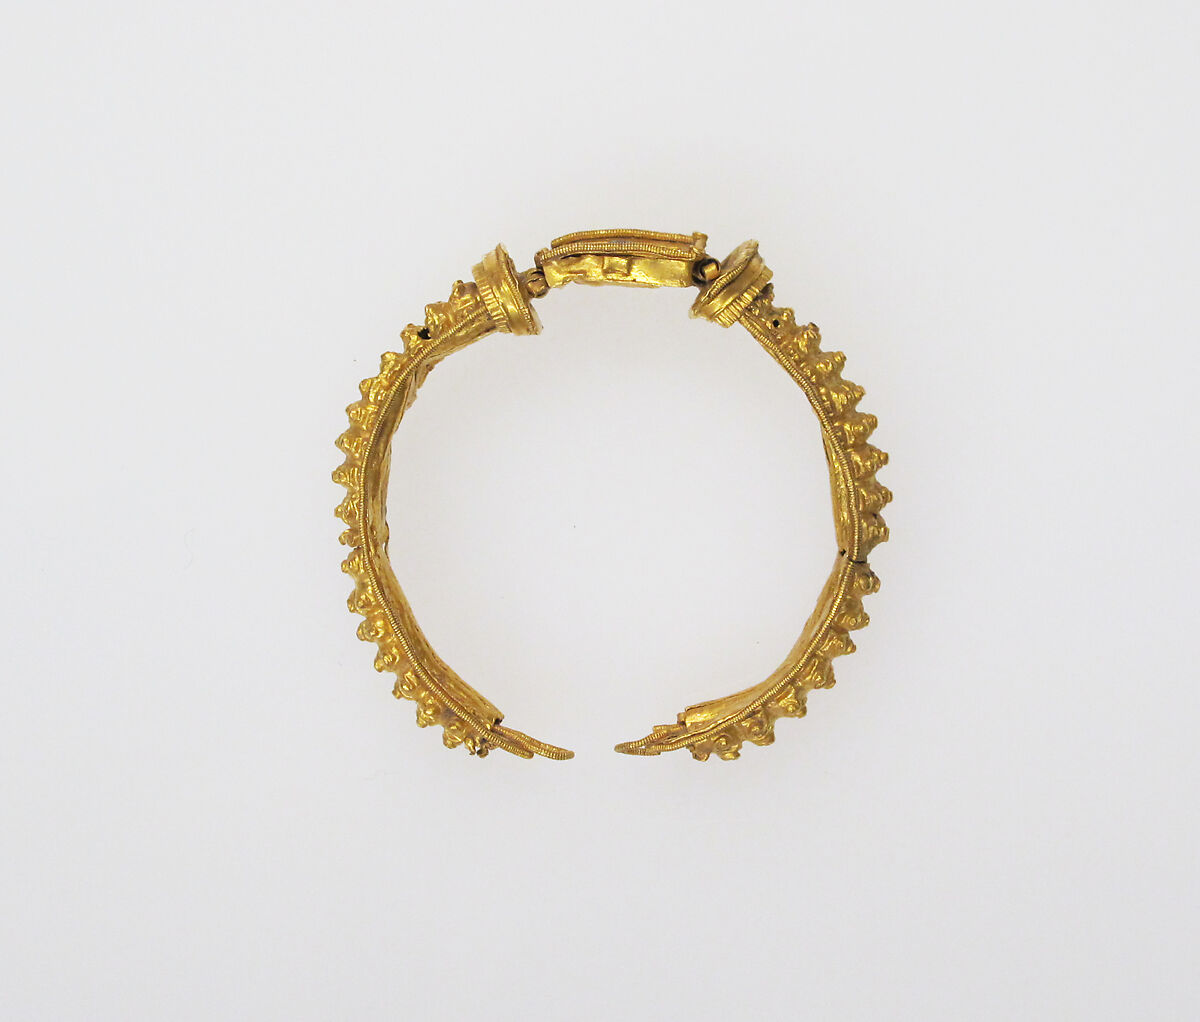 Bracelet with garnet, Gold, garnet, Greek